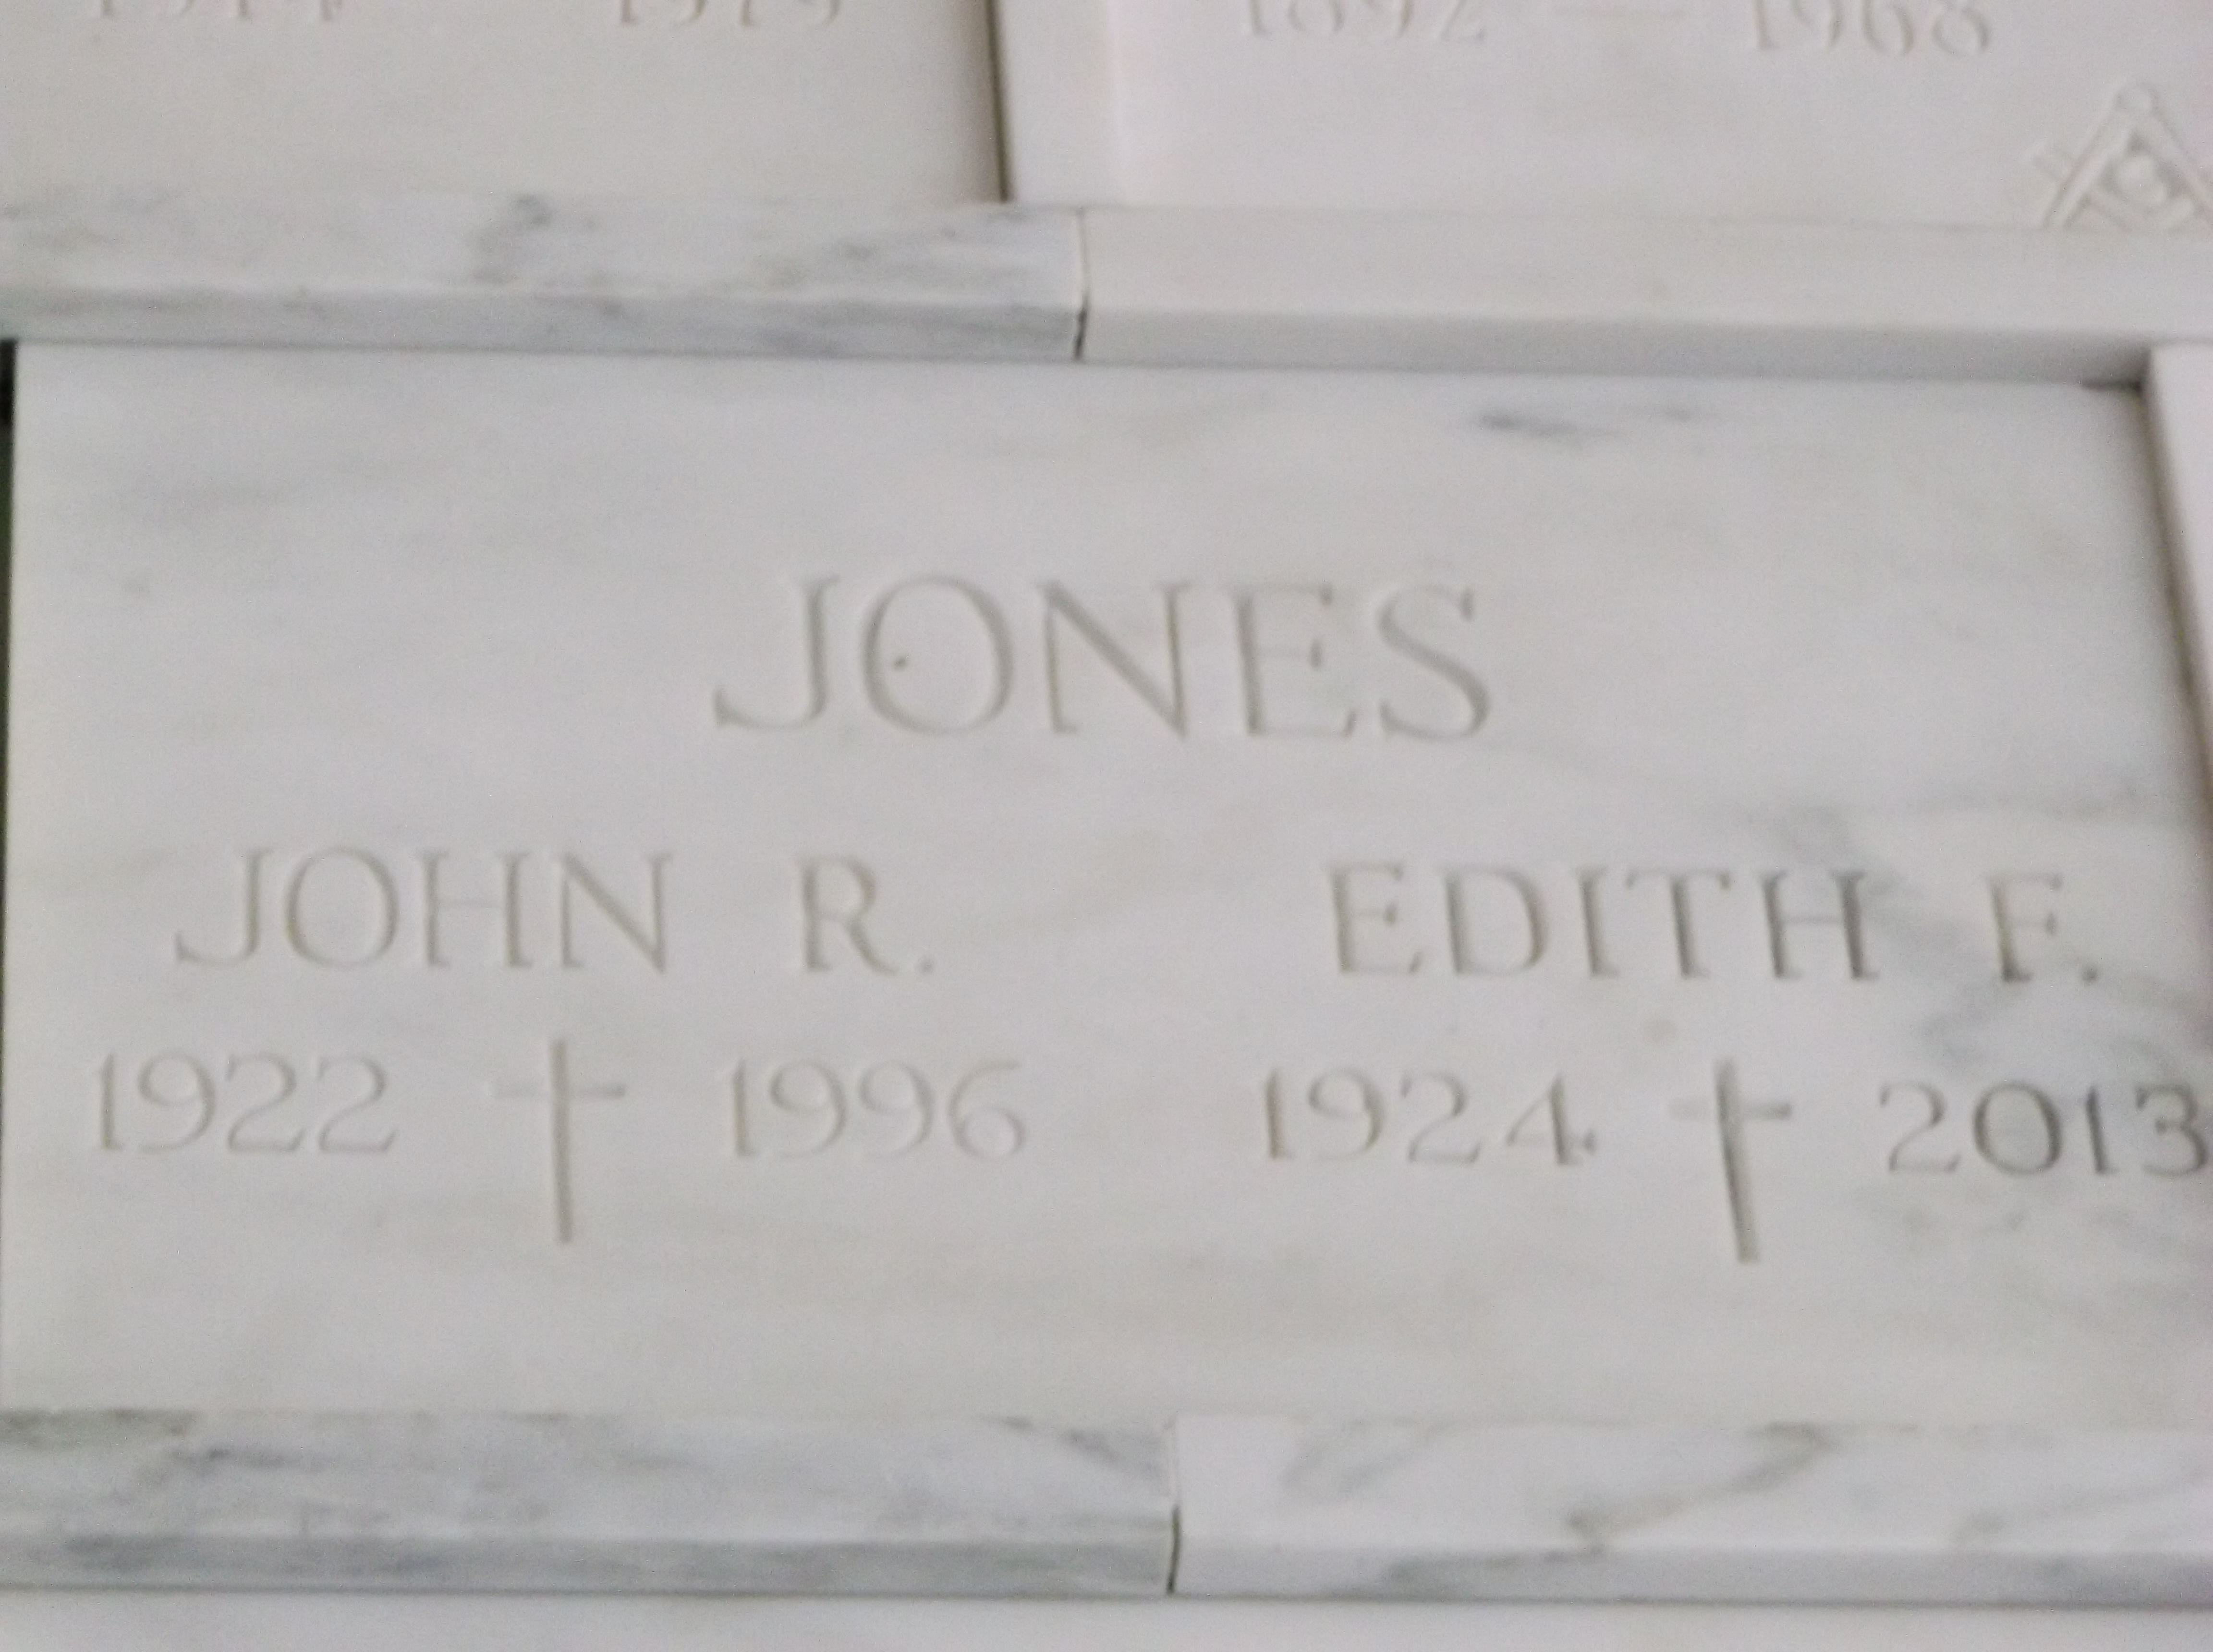 John R Jones